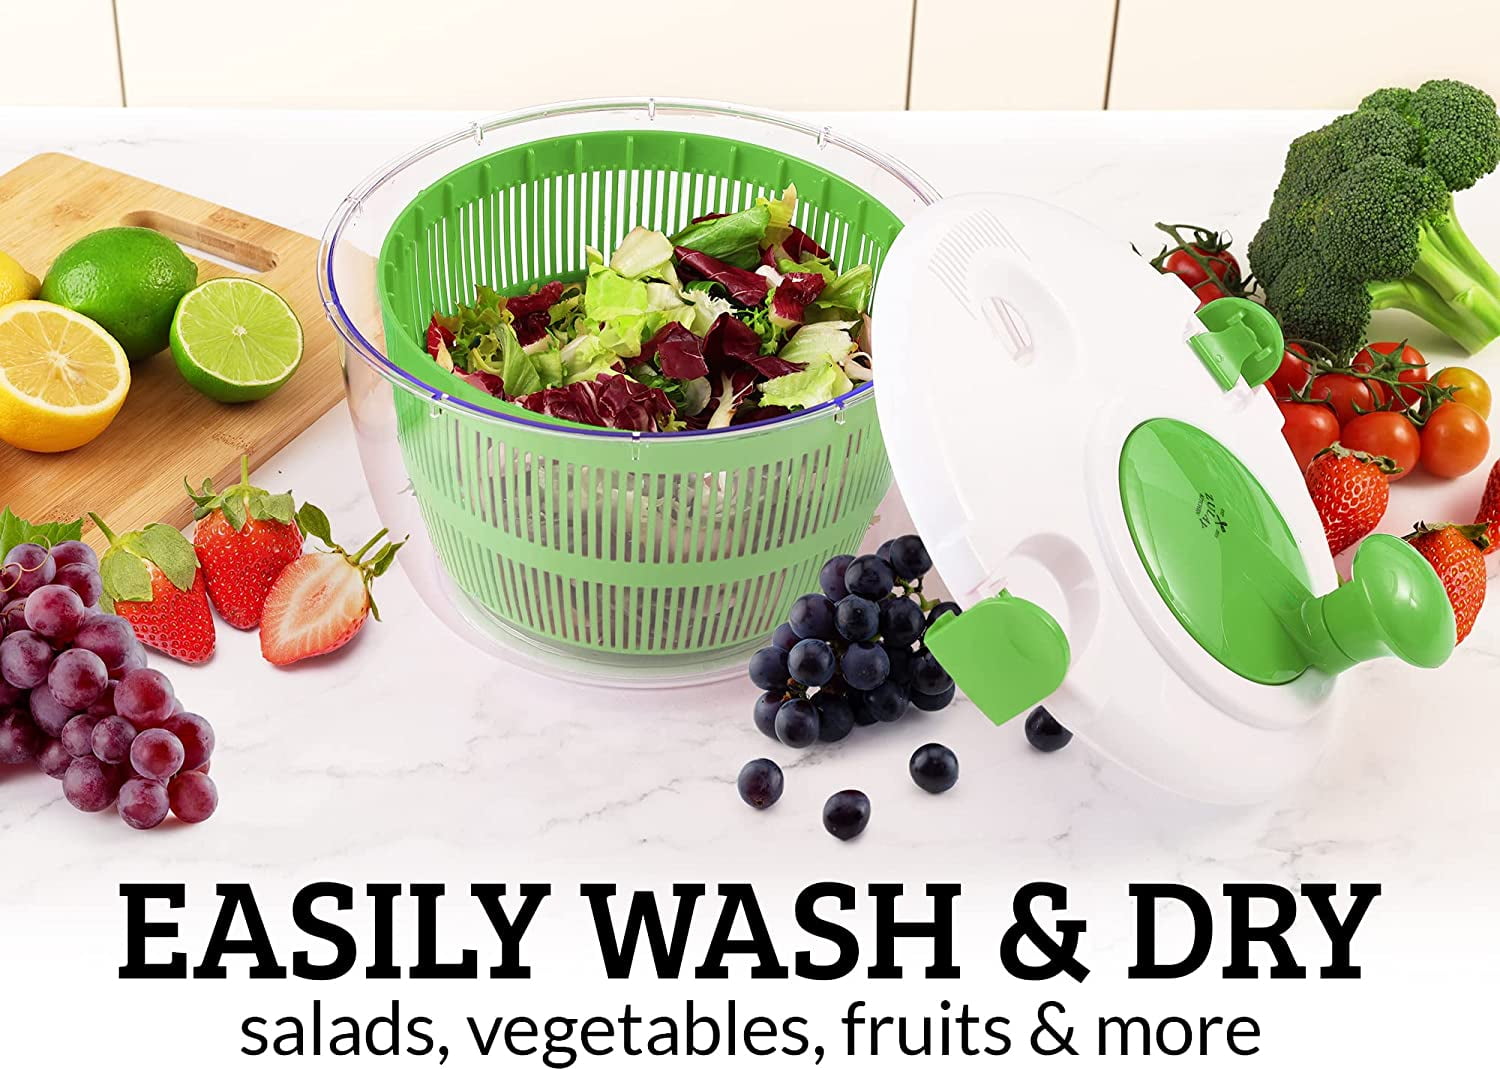 KelaJuan Salad Spinner, Manual Lettuce Dryer Vegetable Fruit Washer with  Crank Handle Locking Lid 